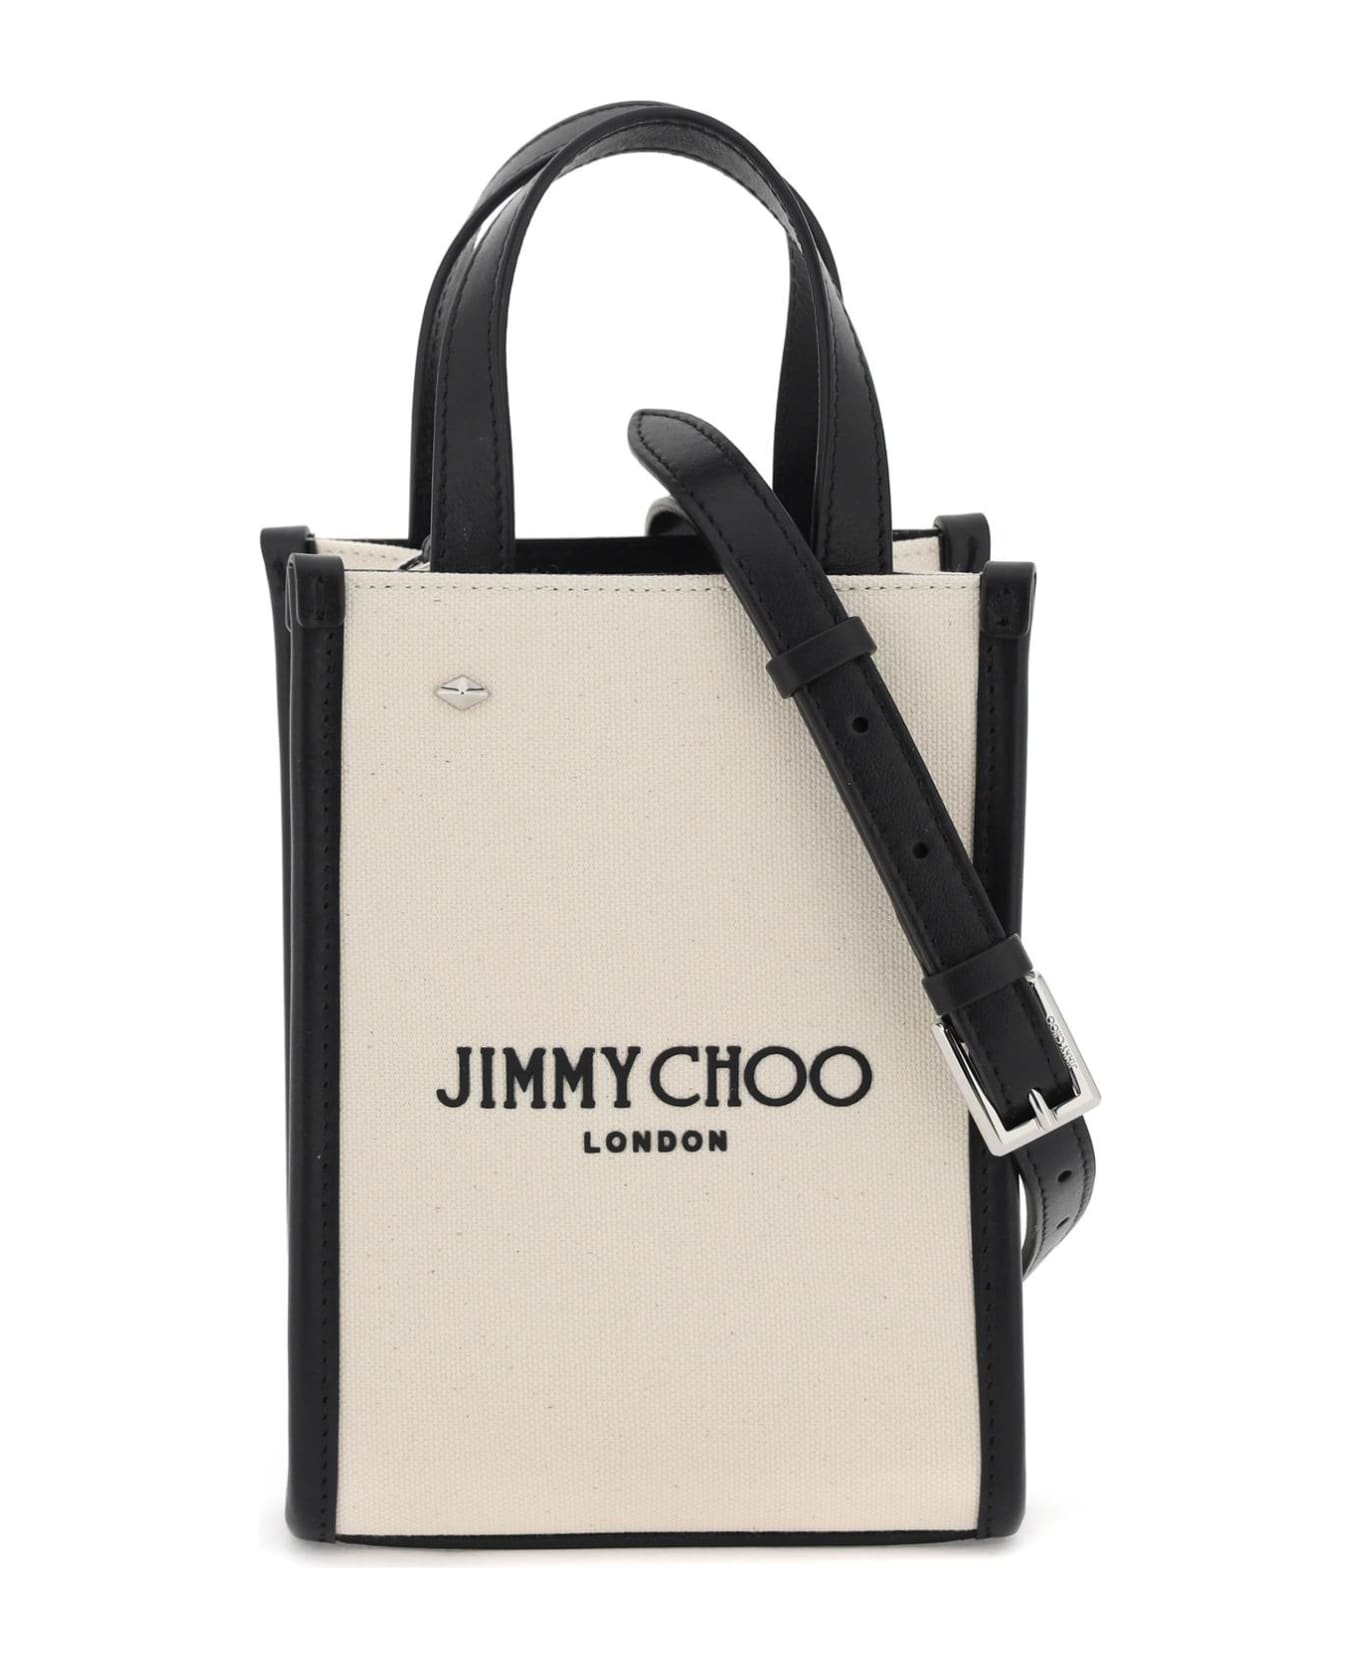 Jimmy Choo N/s Mini Tote Bag - NATURAL BLACK SILVER (Black)